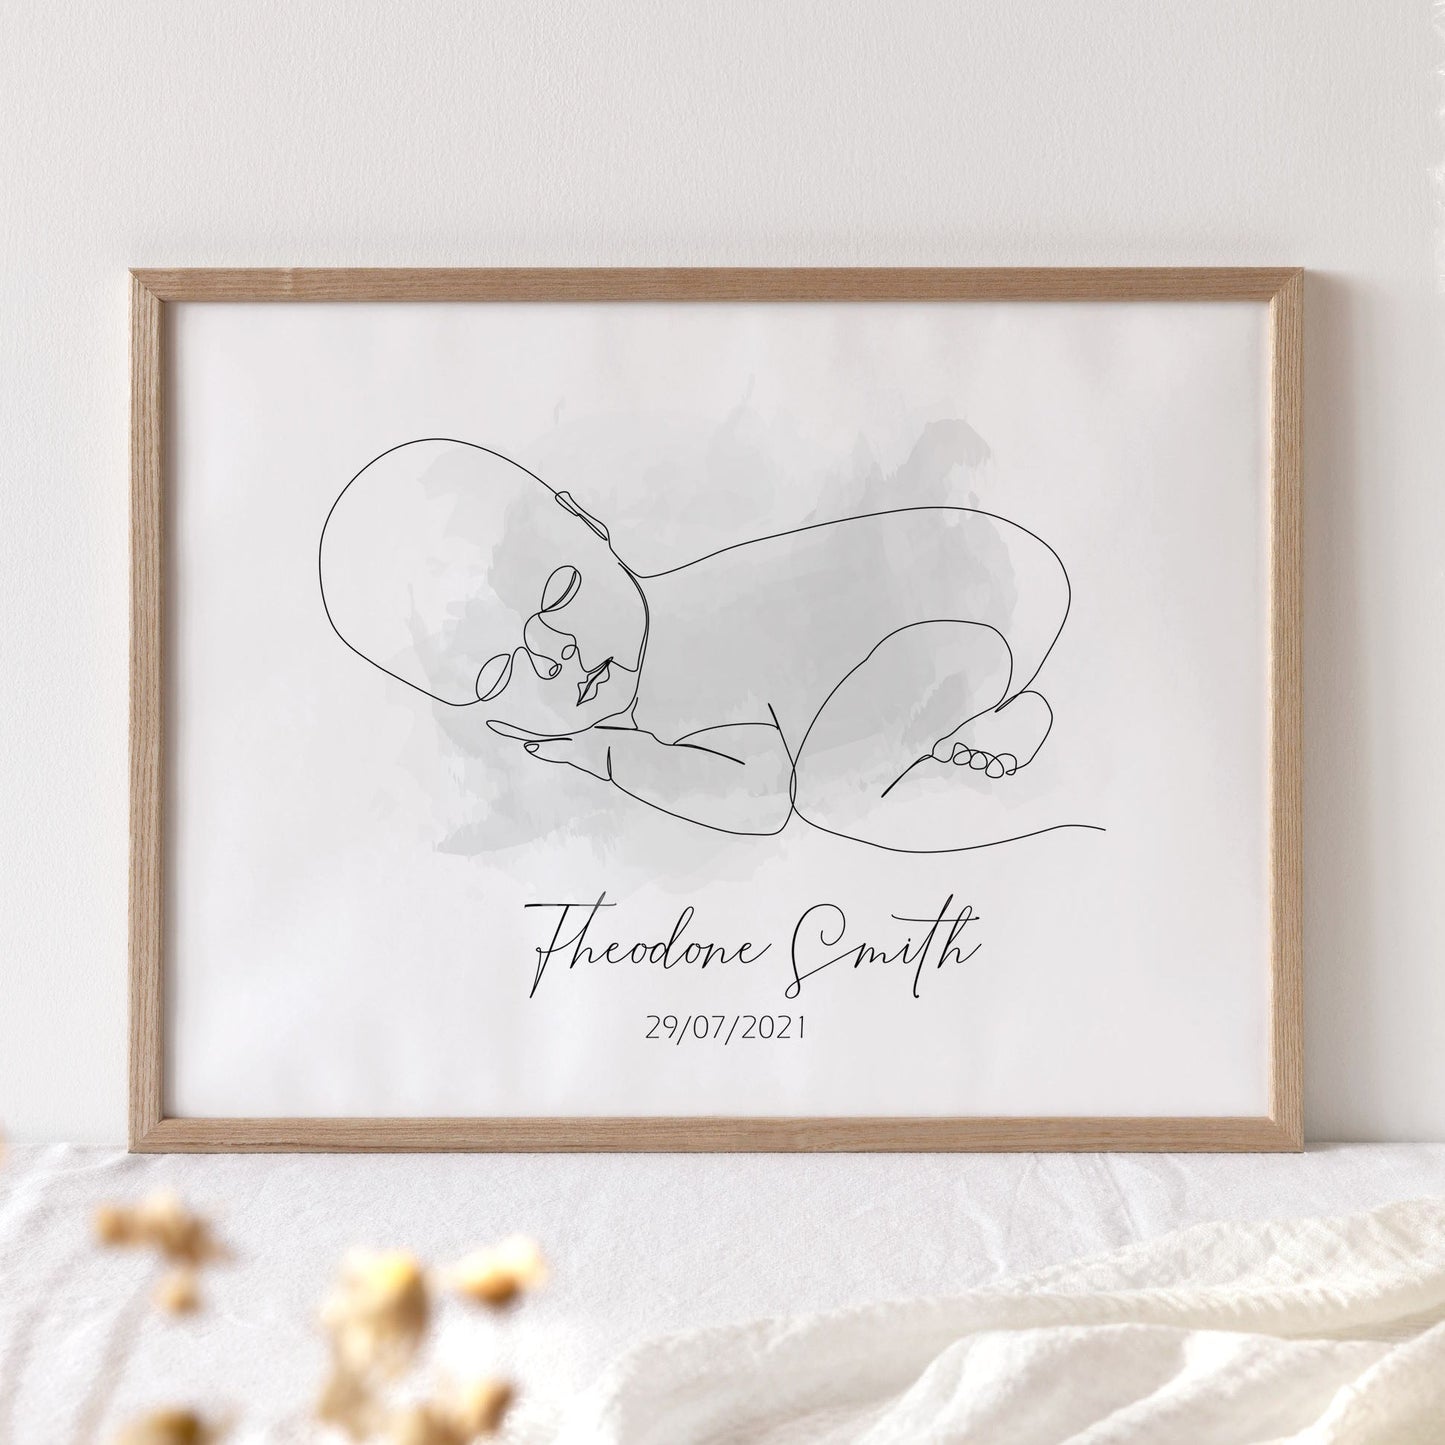 custom name newborn baby line drawing wall art print